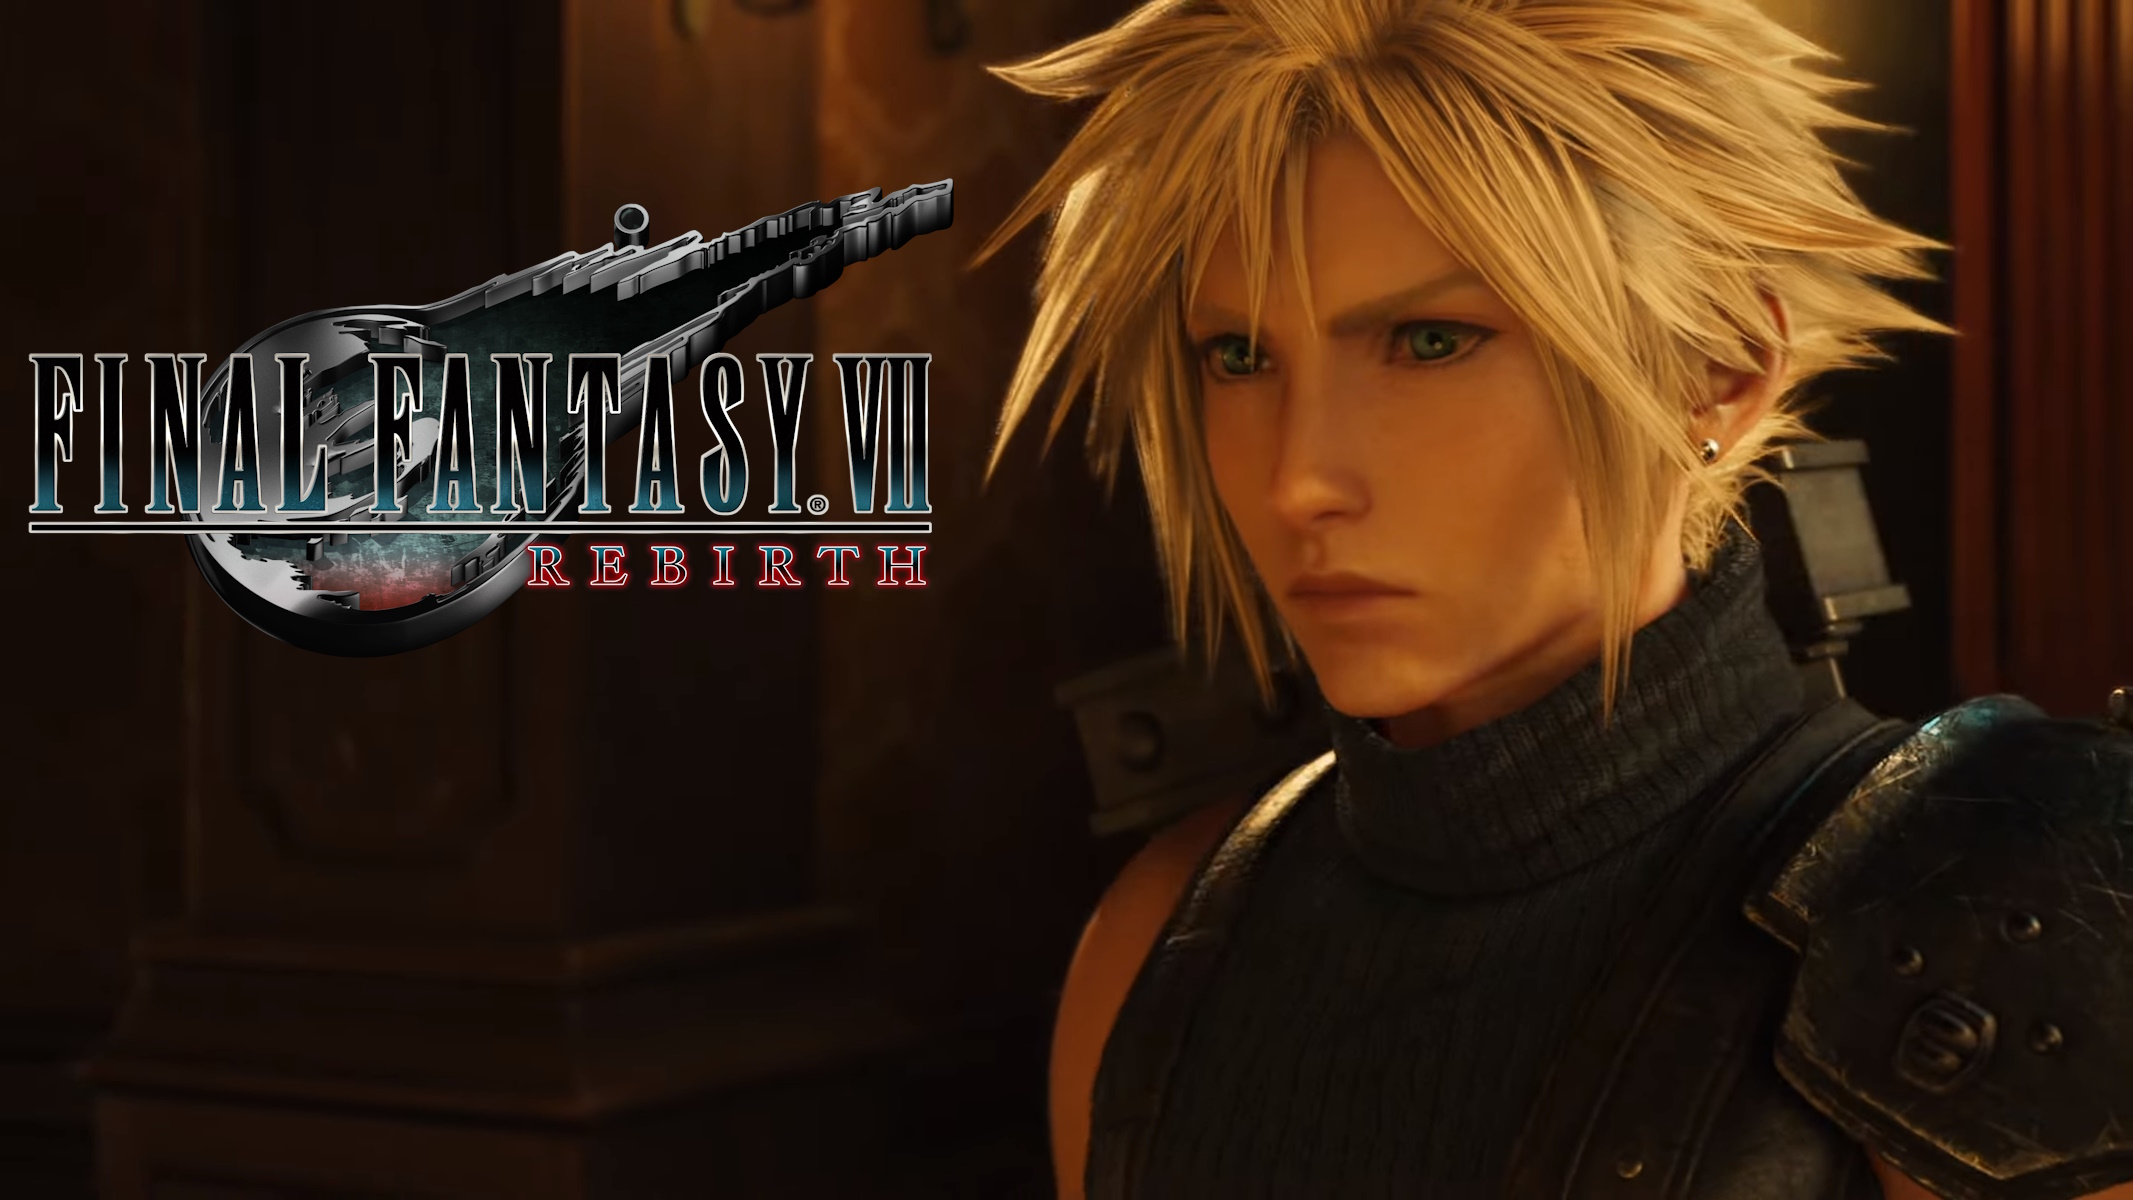 Final Fantasy 7 Rebirth Cloud